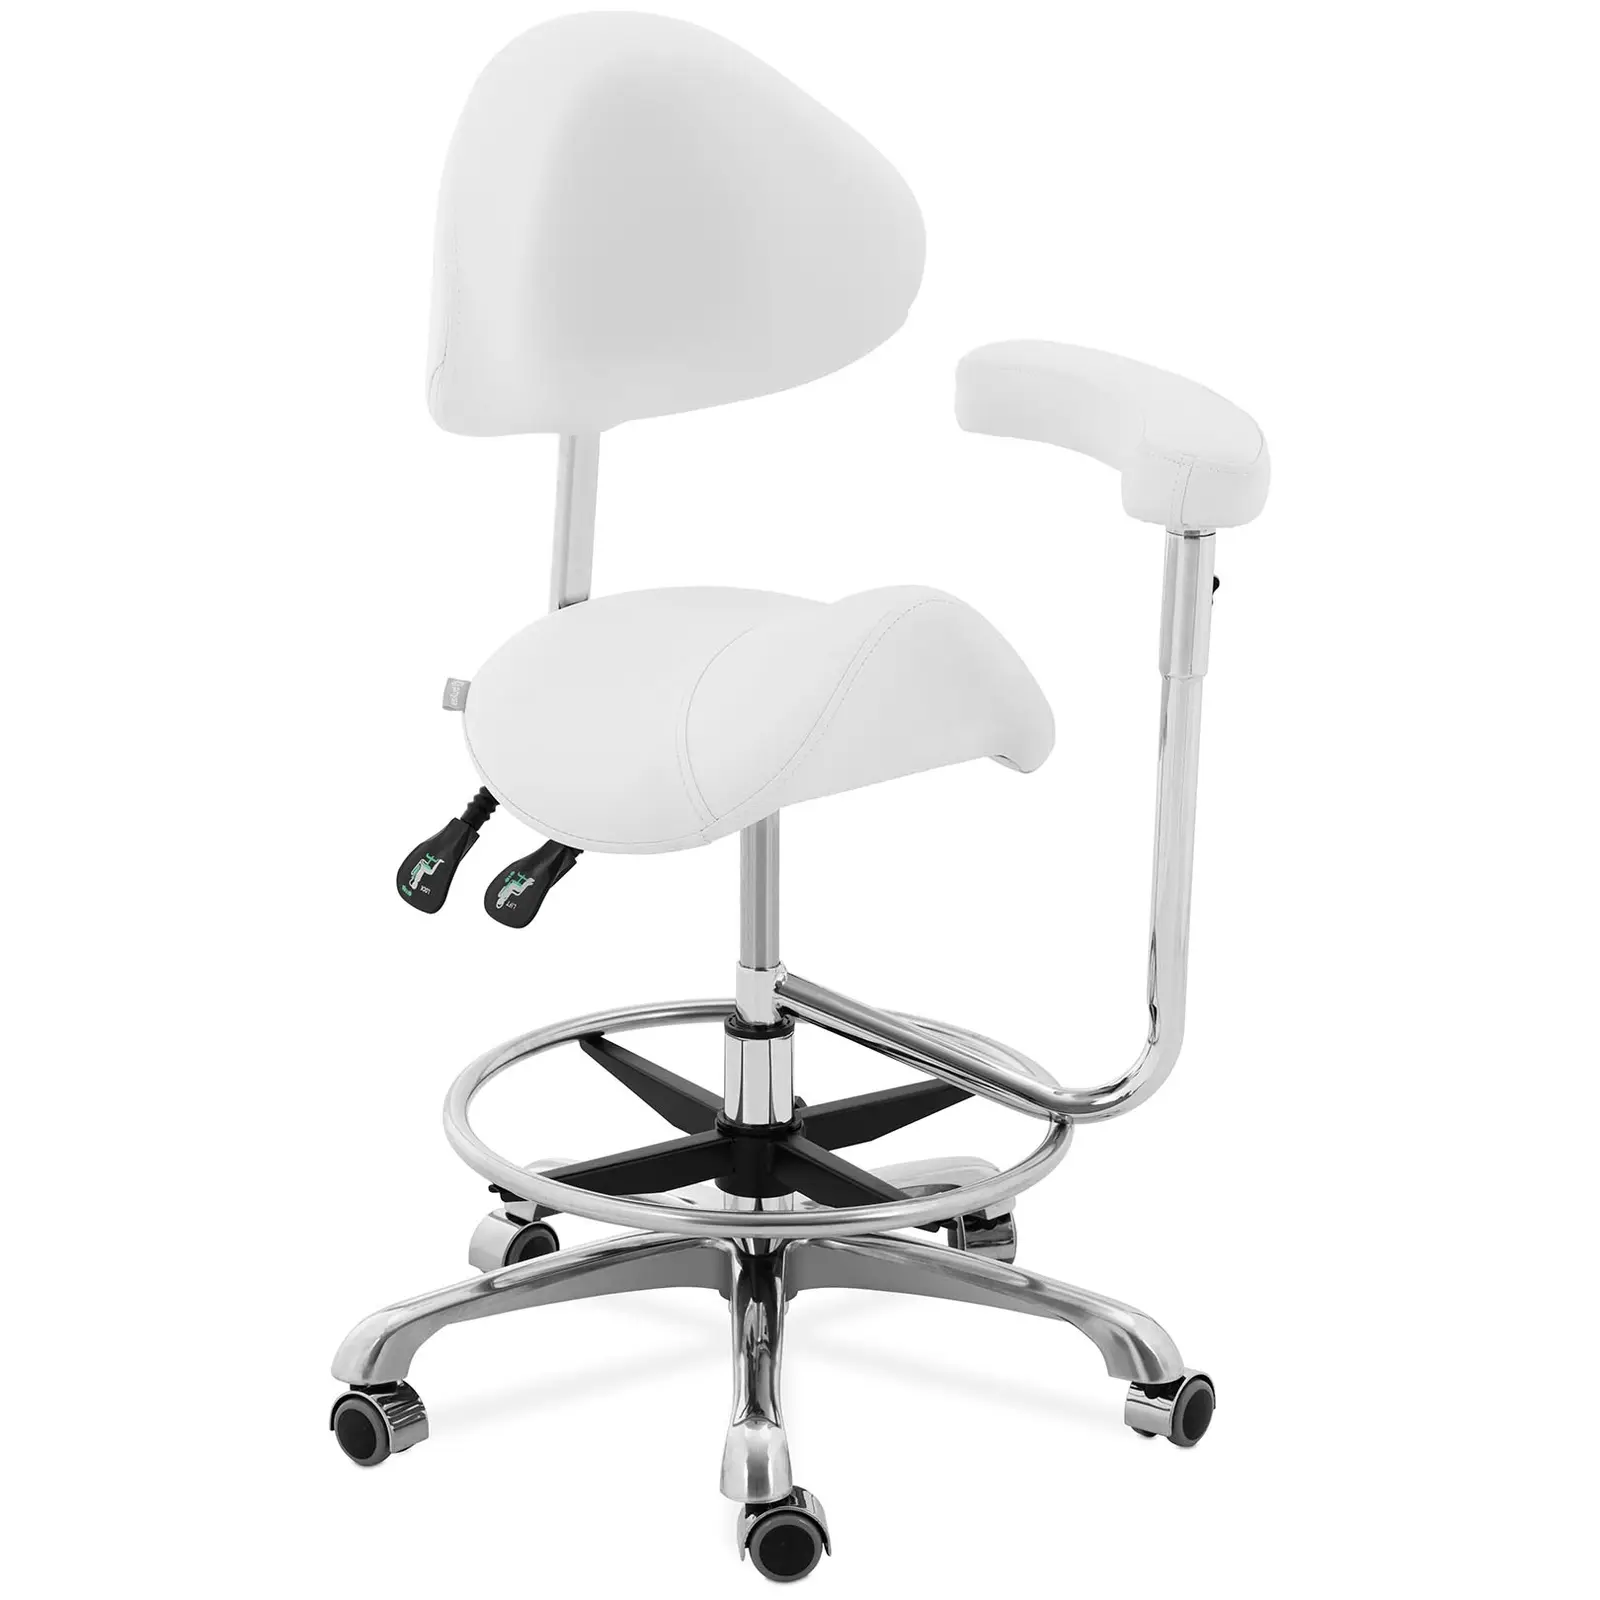 Zadel stoel - In hoogte verstelbare rugleuning en zitting - 51-61 cm - 150 kg - Wit